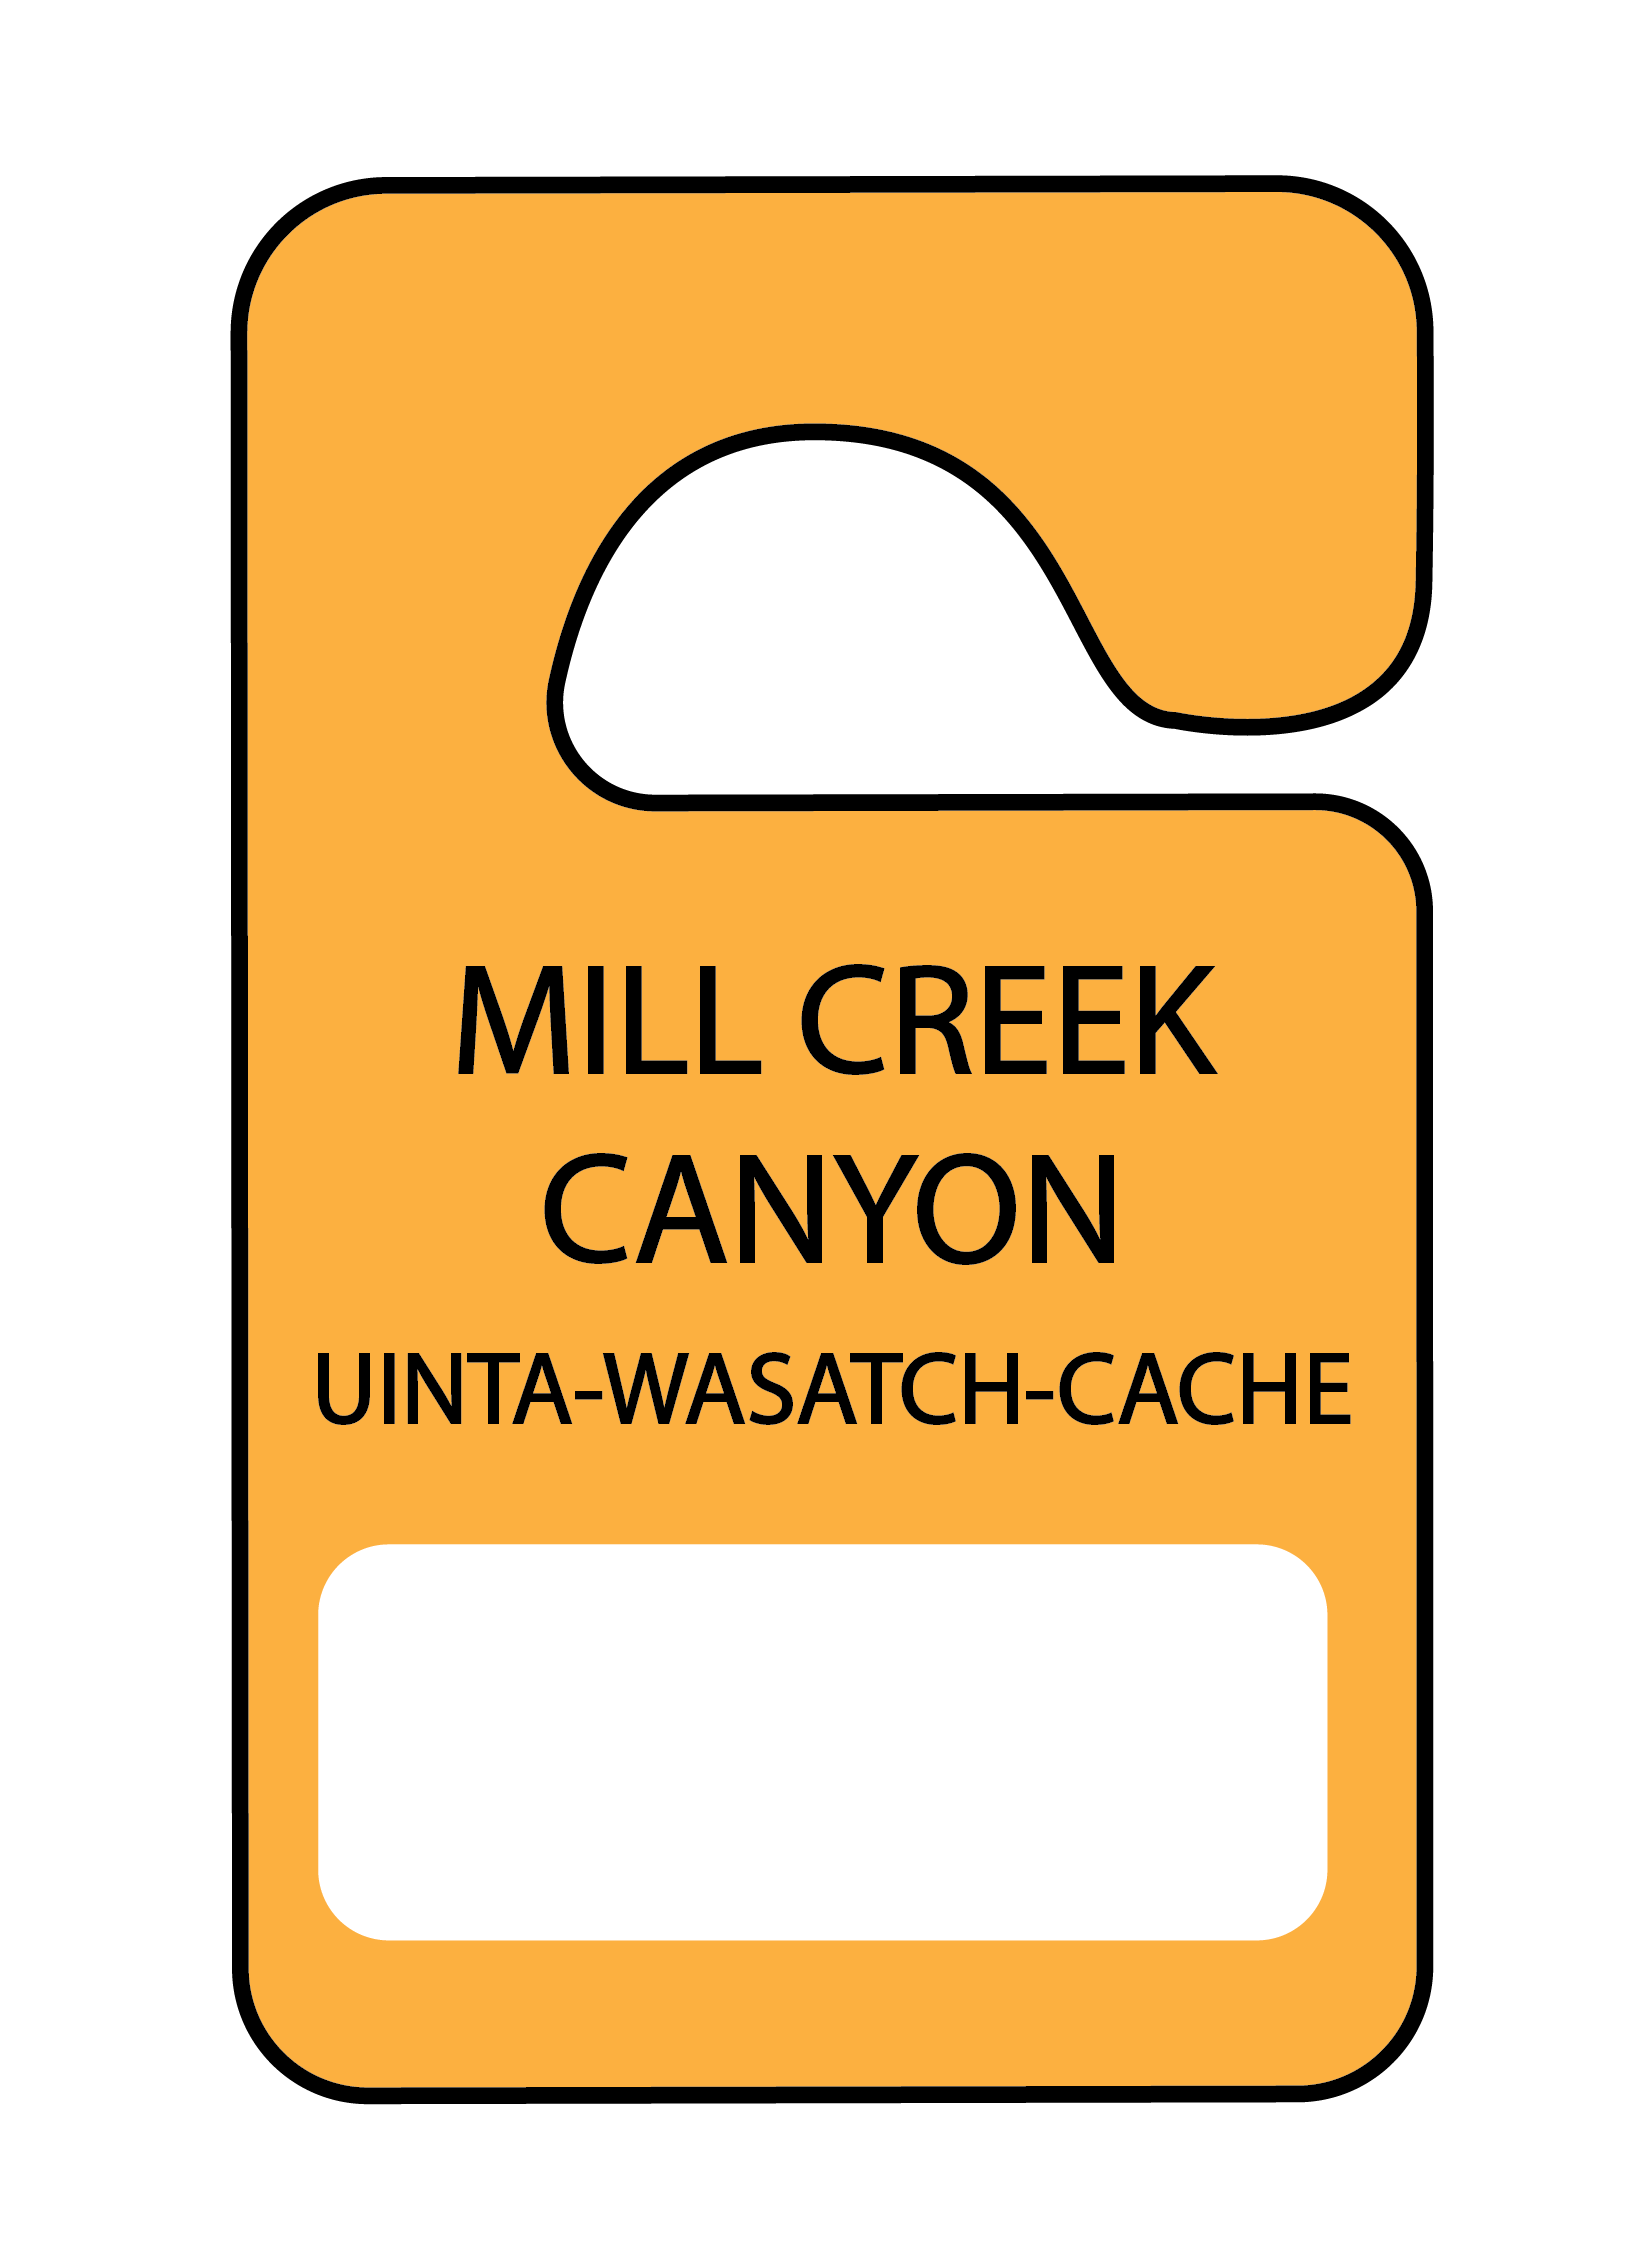 Millcreek Canyon Pass Info Graphic